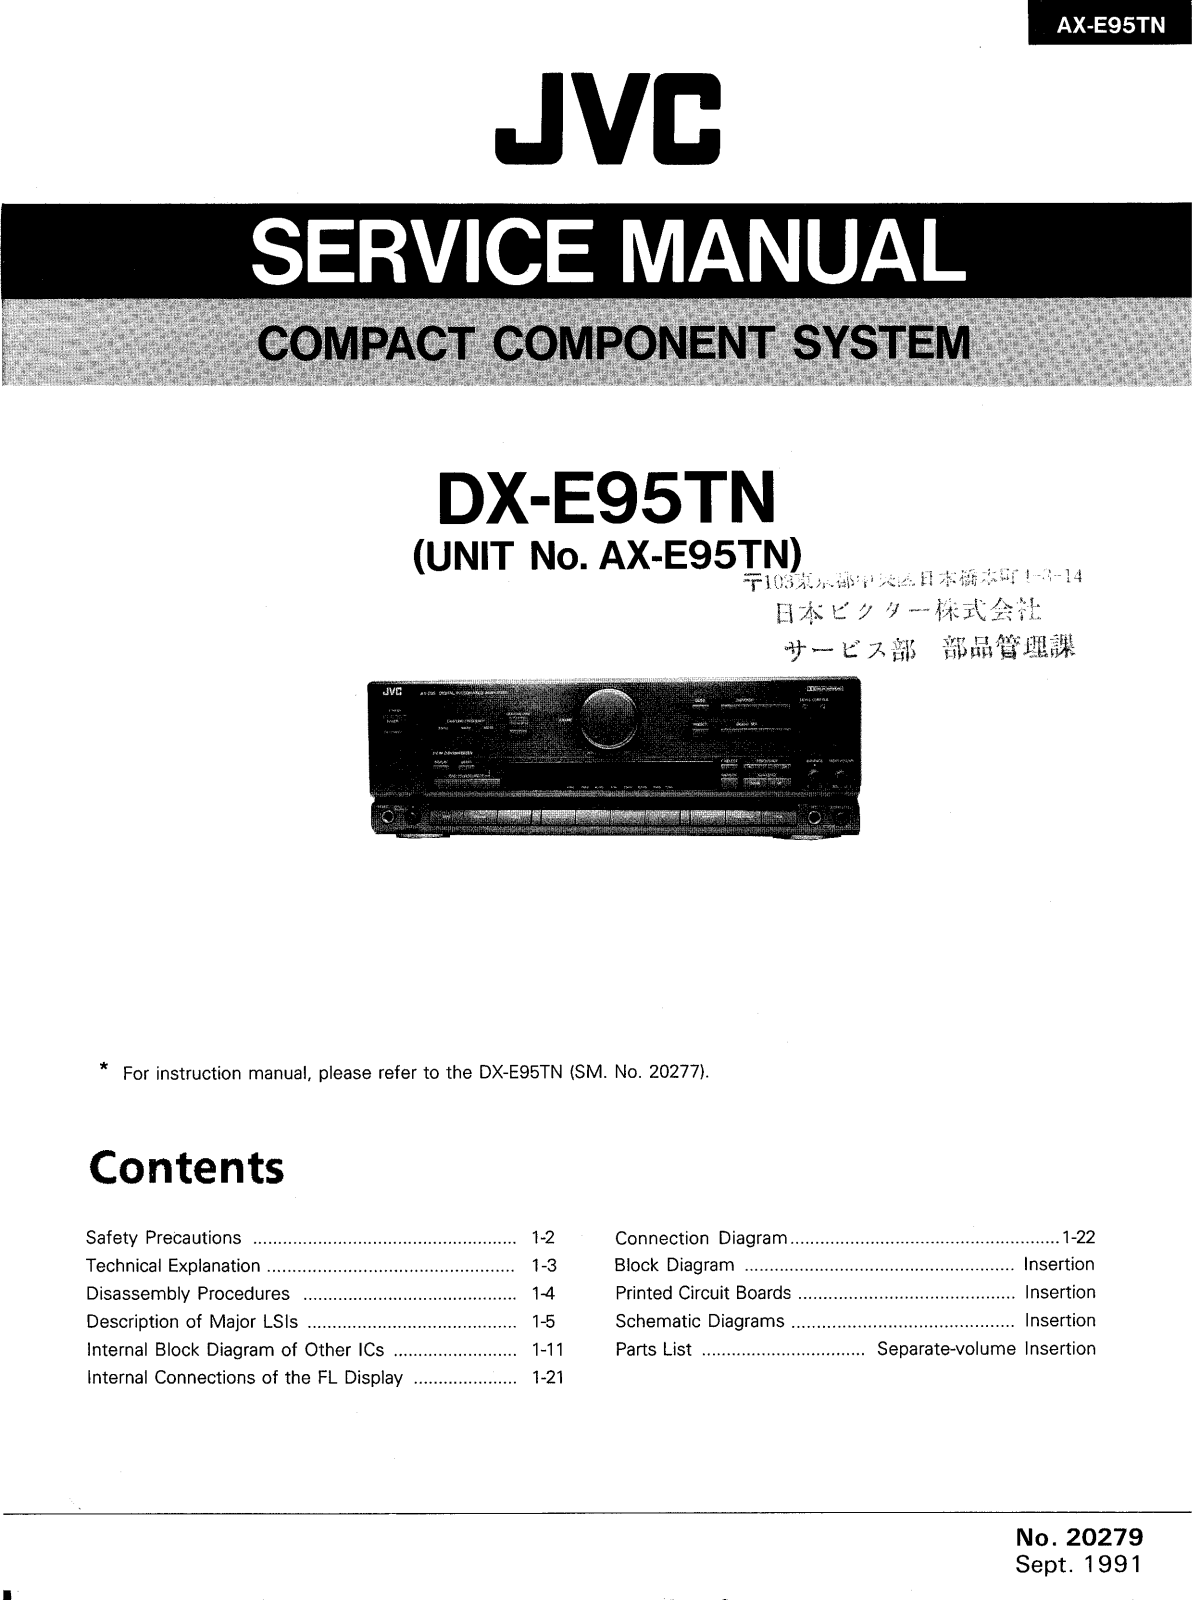 Jvc DX-E95-TN Service Manual